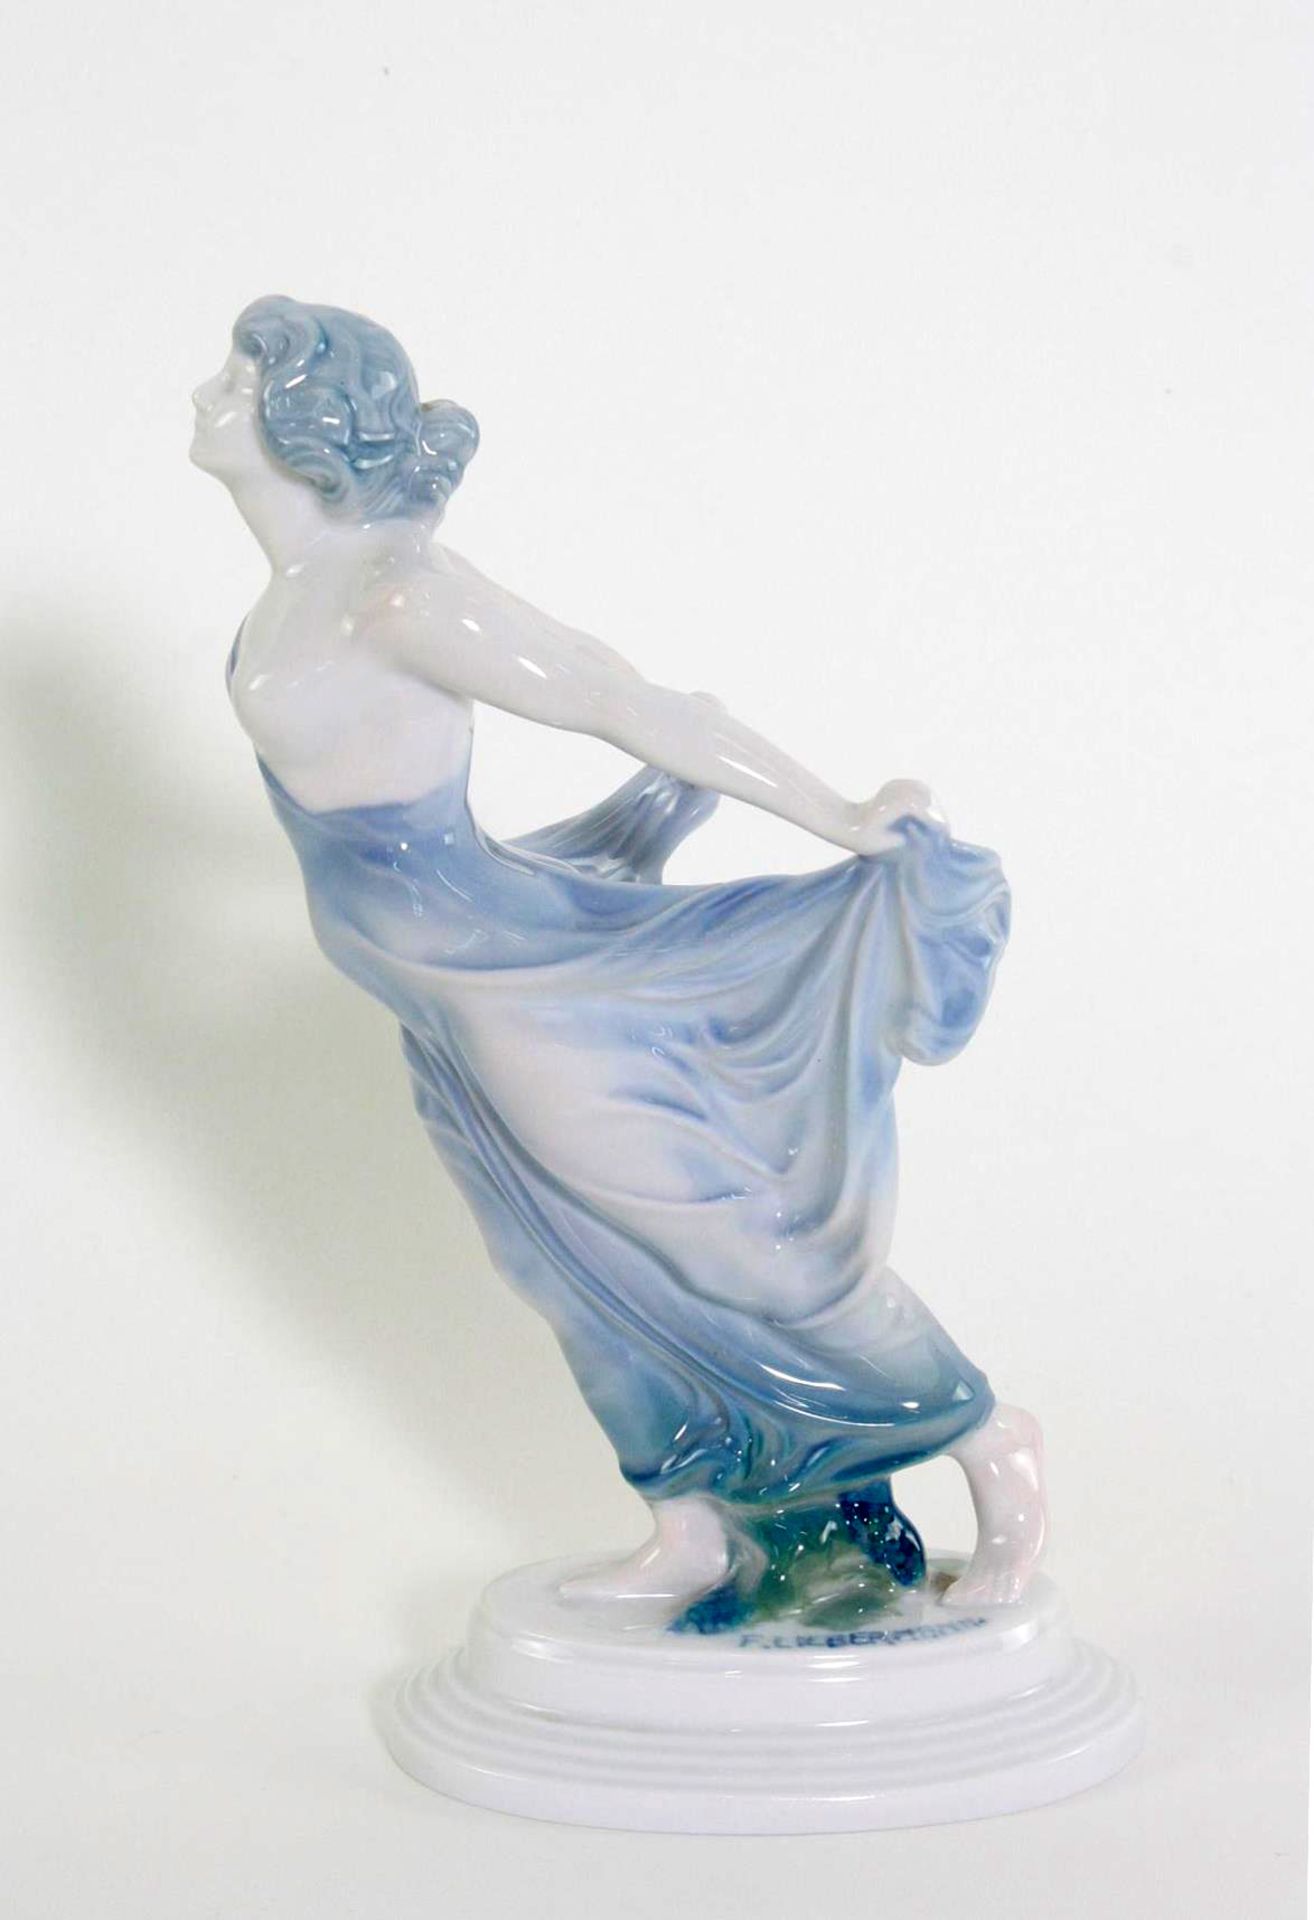 Porzellanskulptur, "Tänzerin", Rosenthal, Kunst-Abteilung, 1920er Jahre